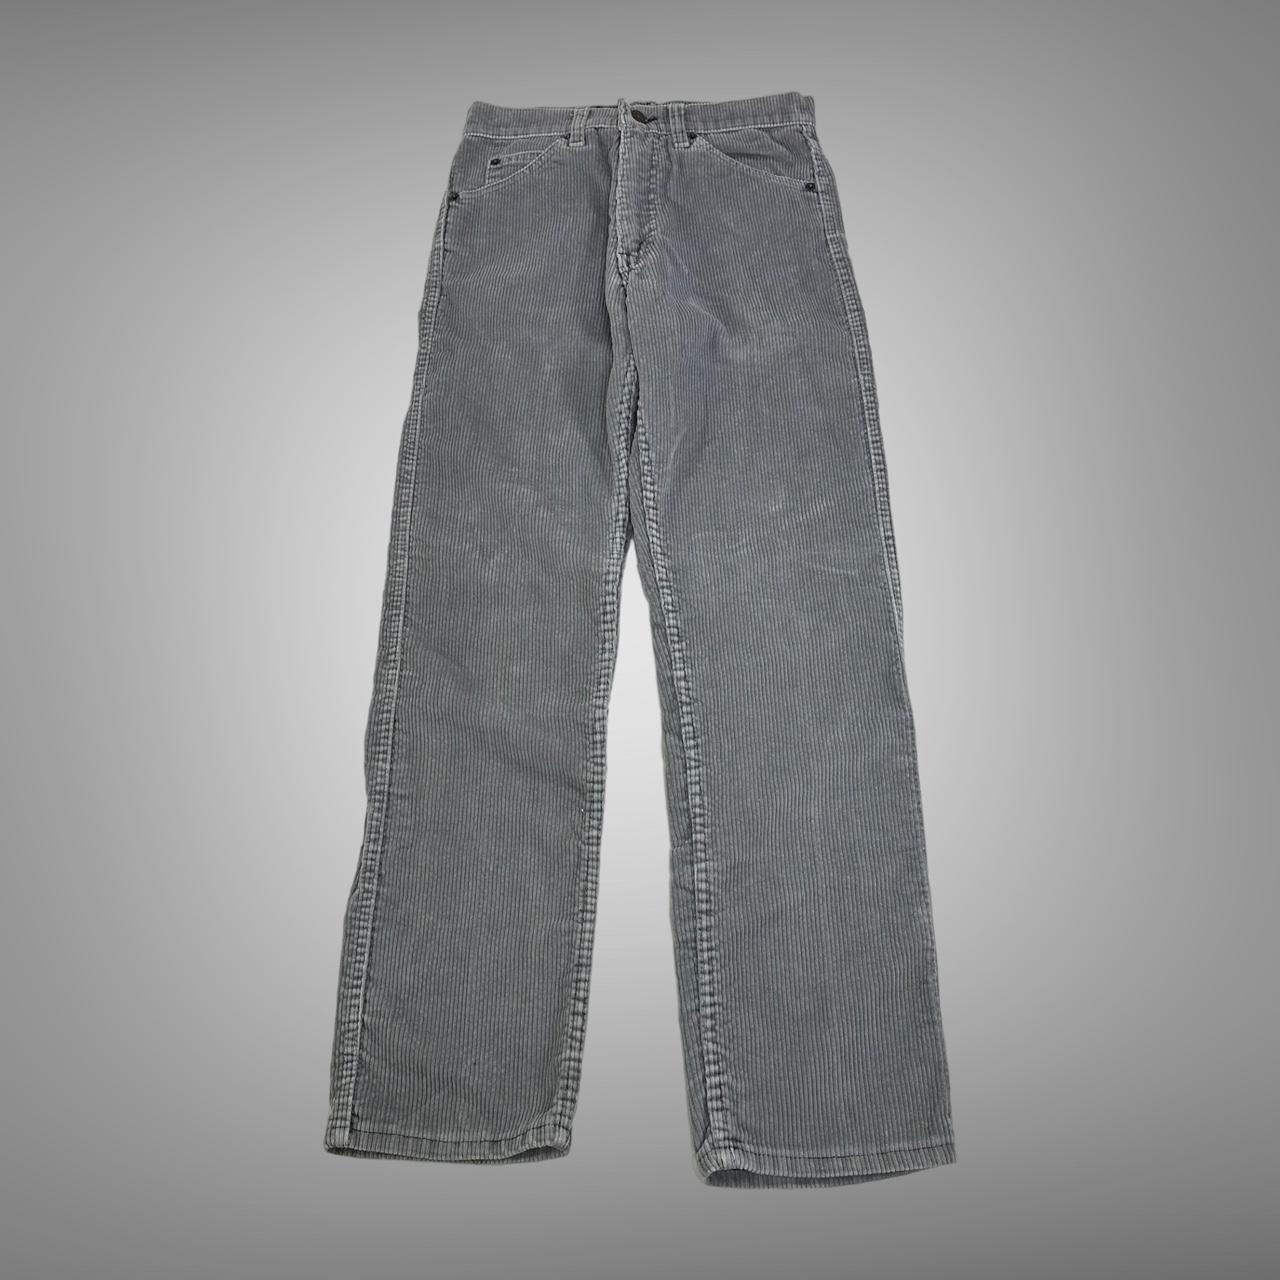 Vintage 1970s gray corduroy Levi’s pants size 28x32... - Depop